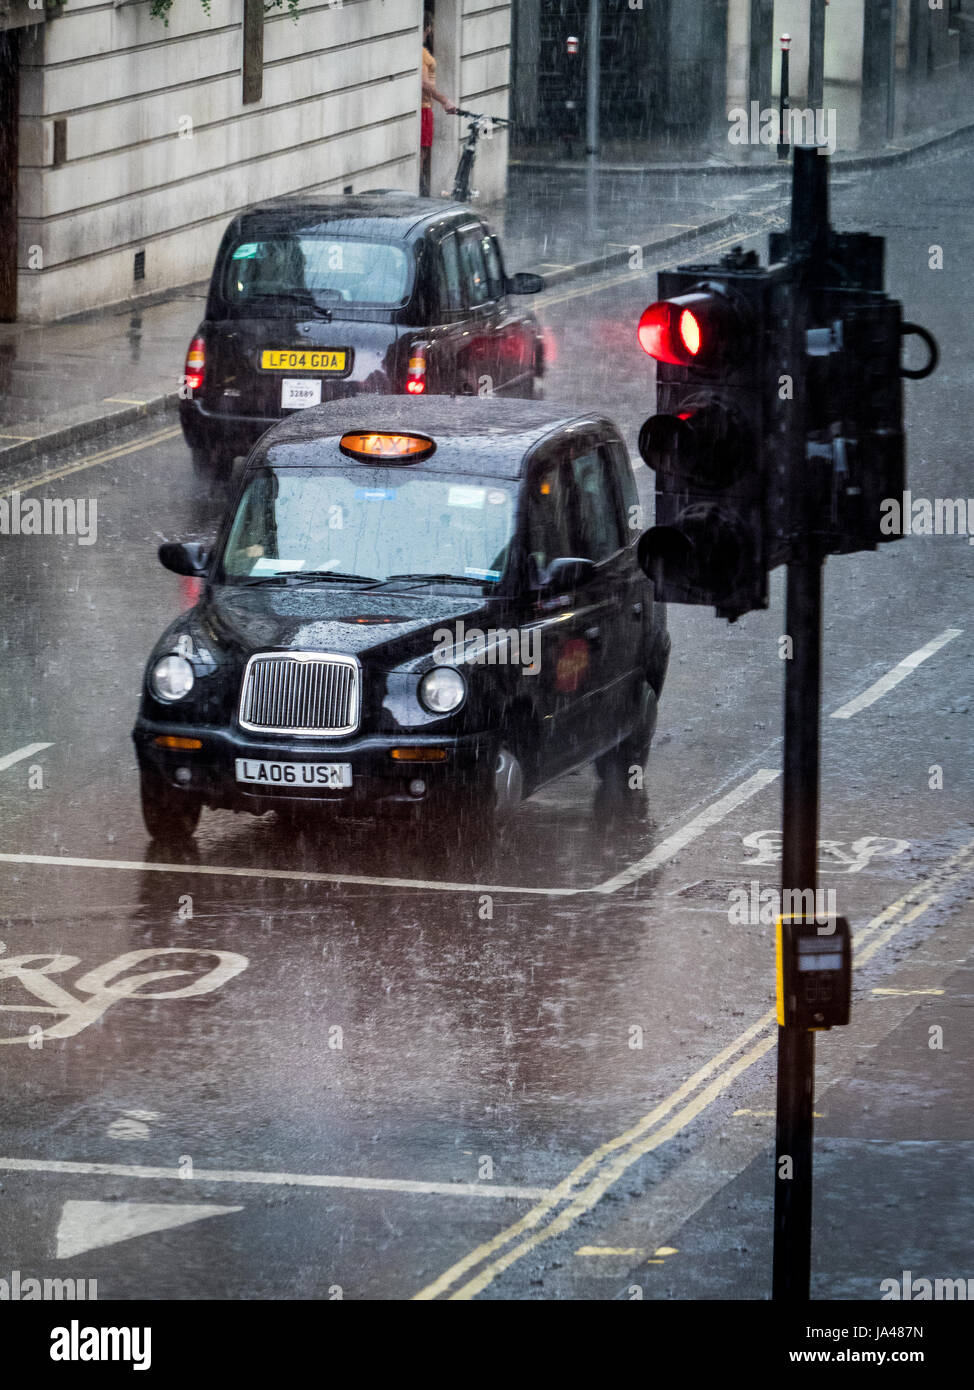 London Taxi im Regen. London Taxi Black Cab hält an der Ampel in einem Regenguss. Stockfoto